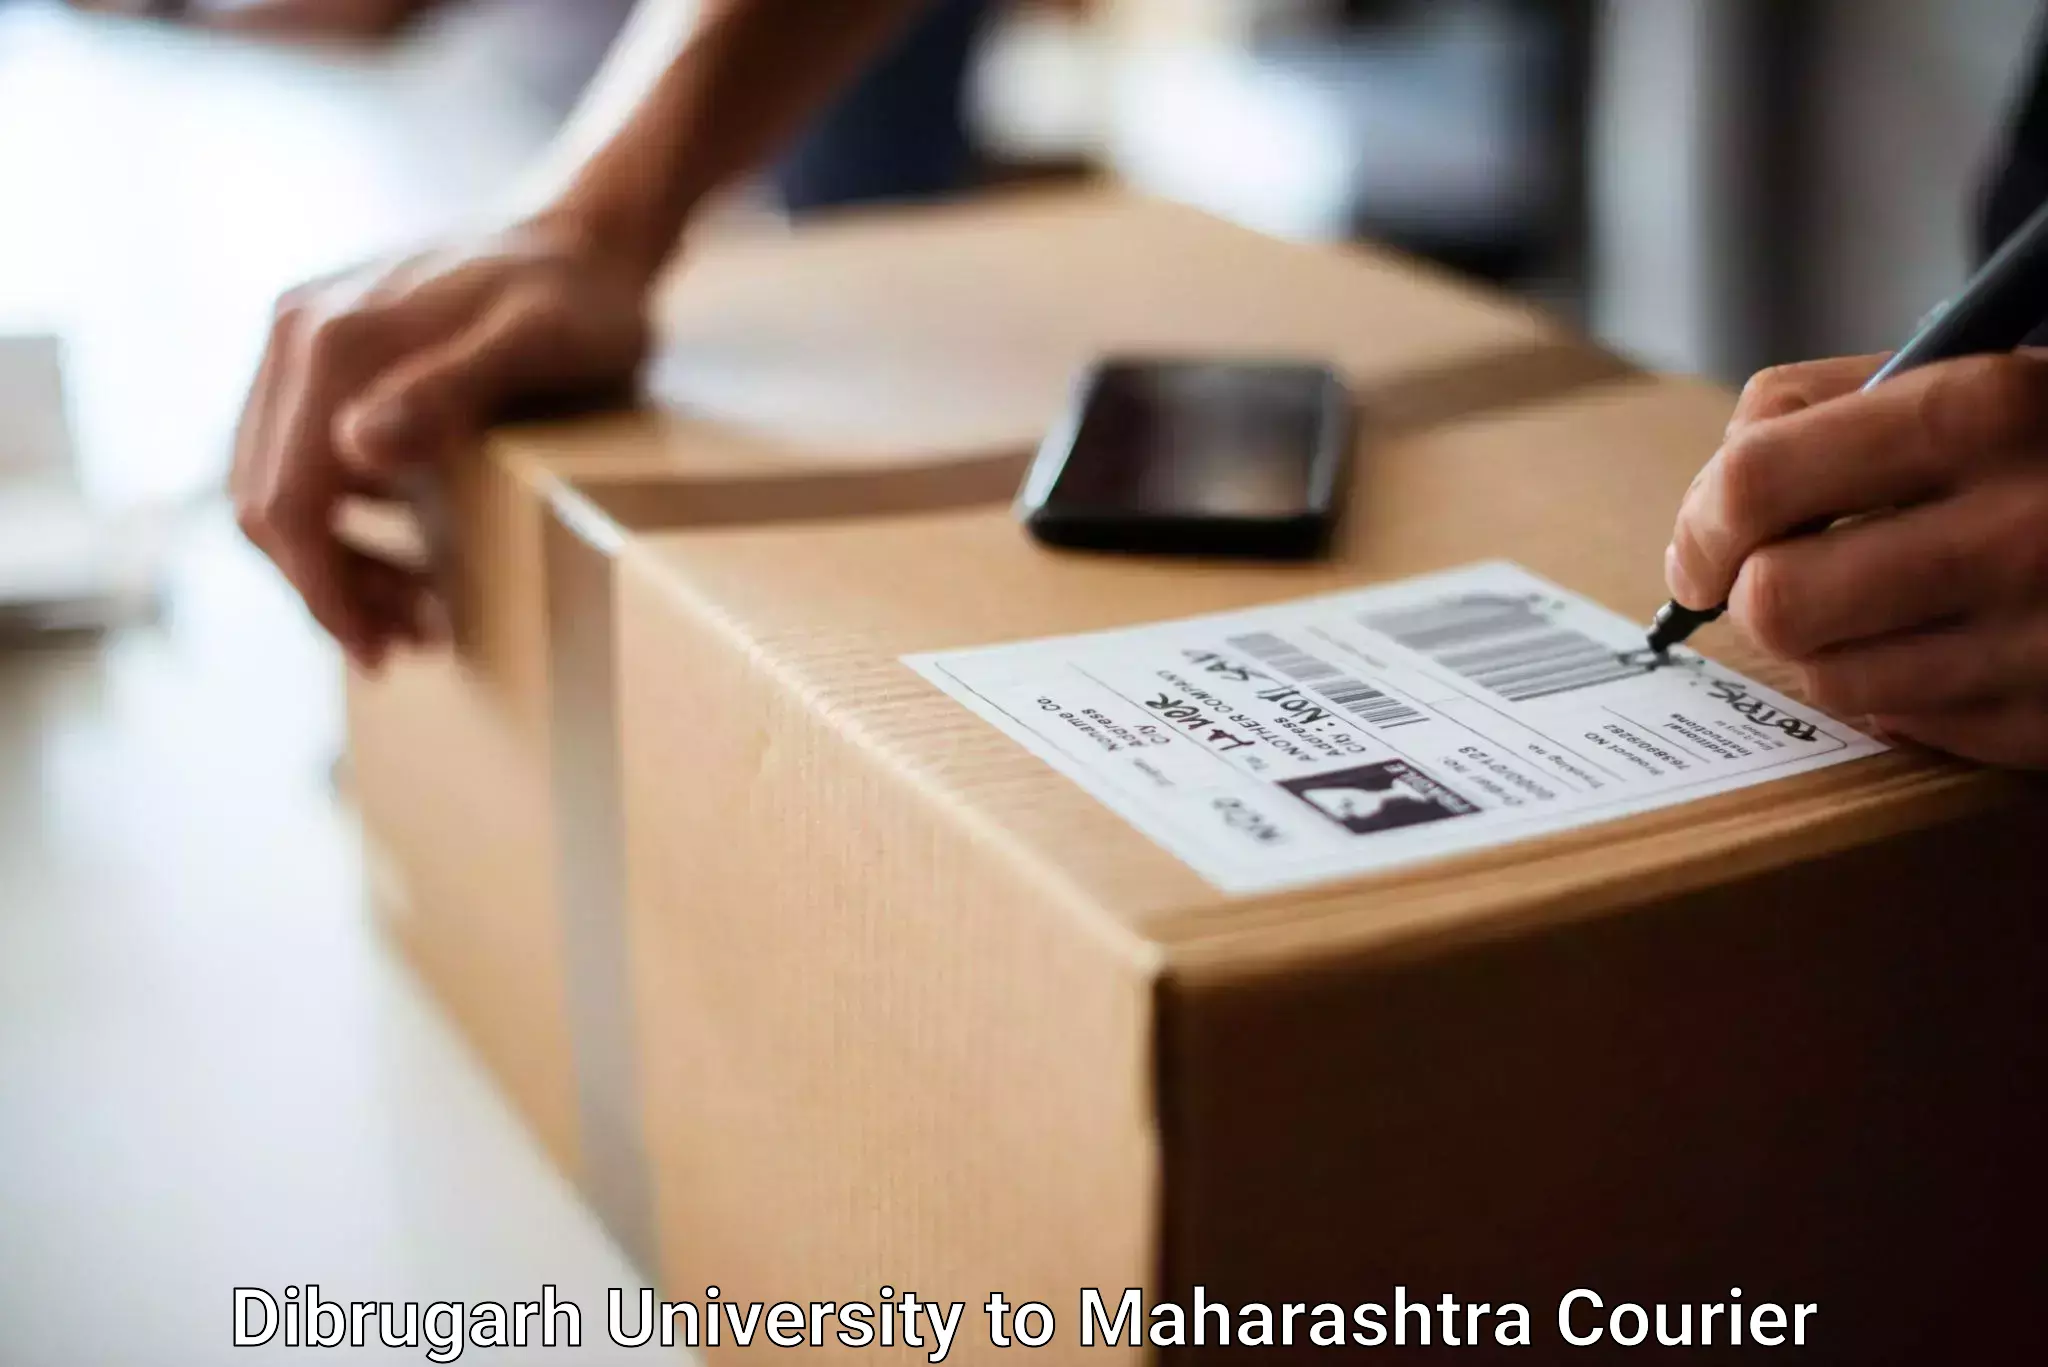 Baggage relocation service Dibrugarh University to Shrivardhan